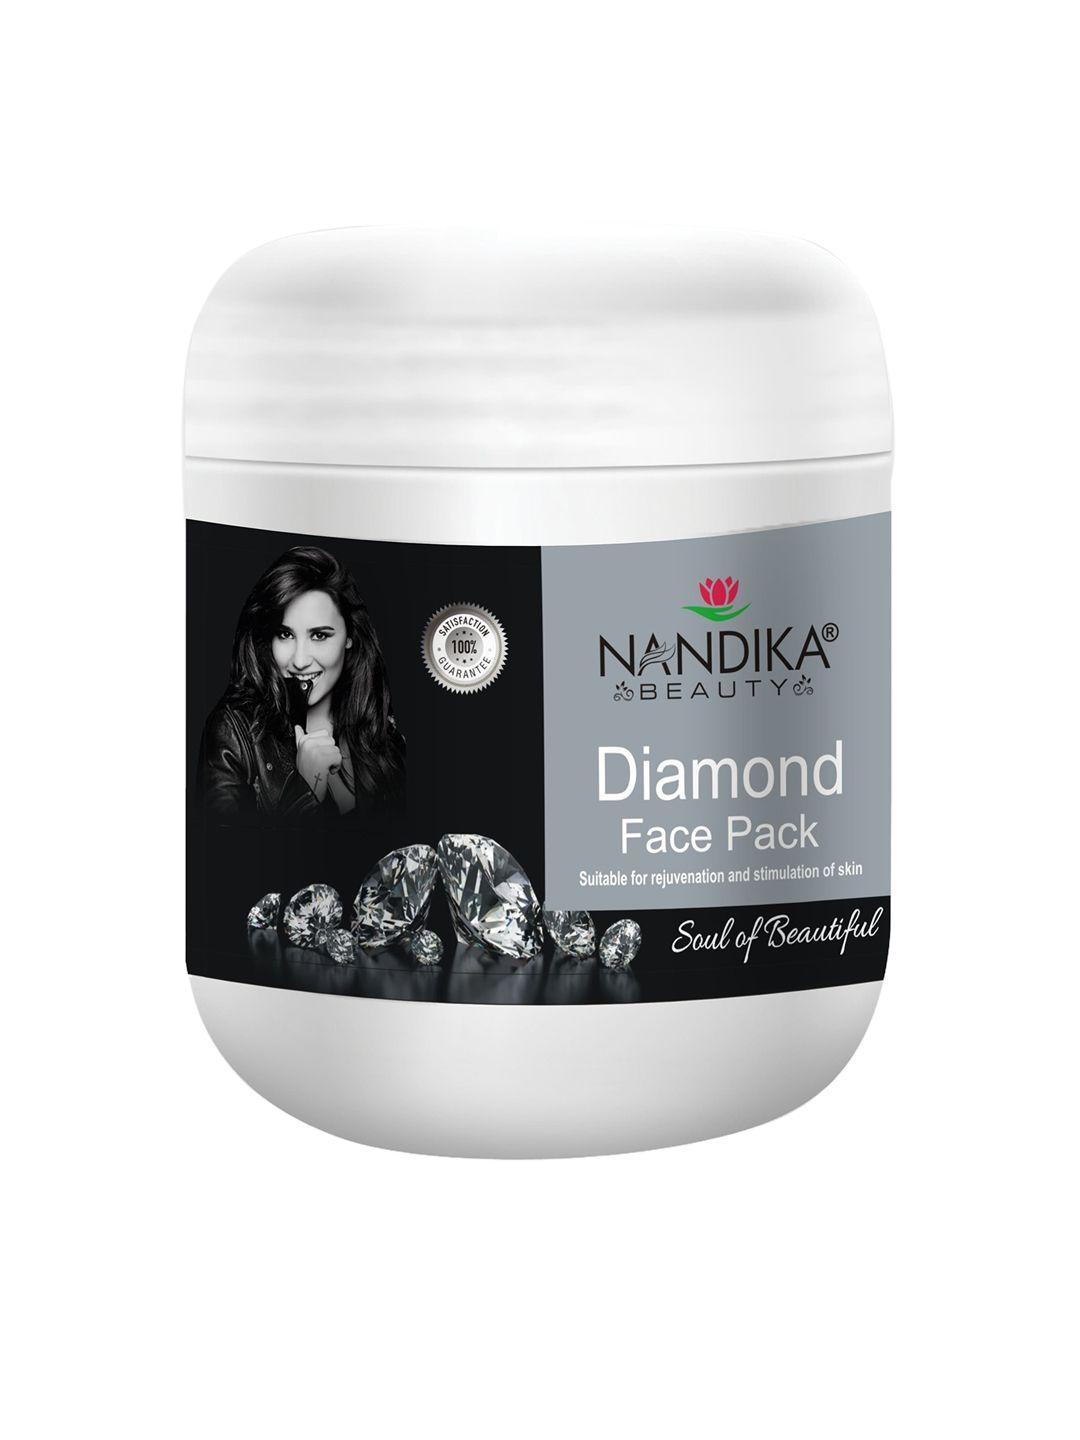 nandika beauty diamond face pack for rejuvenation & skin stimulation - 500 g